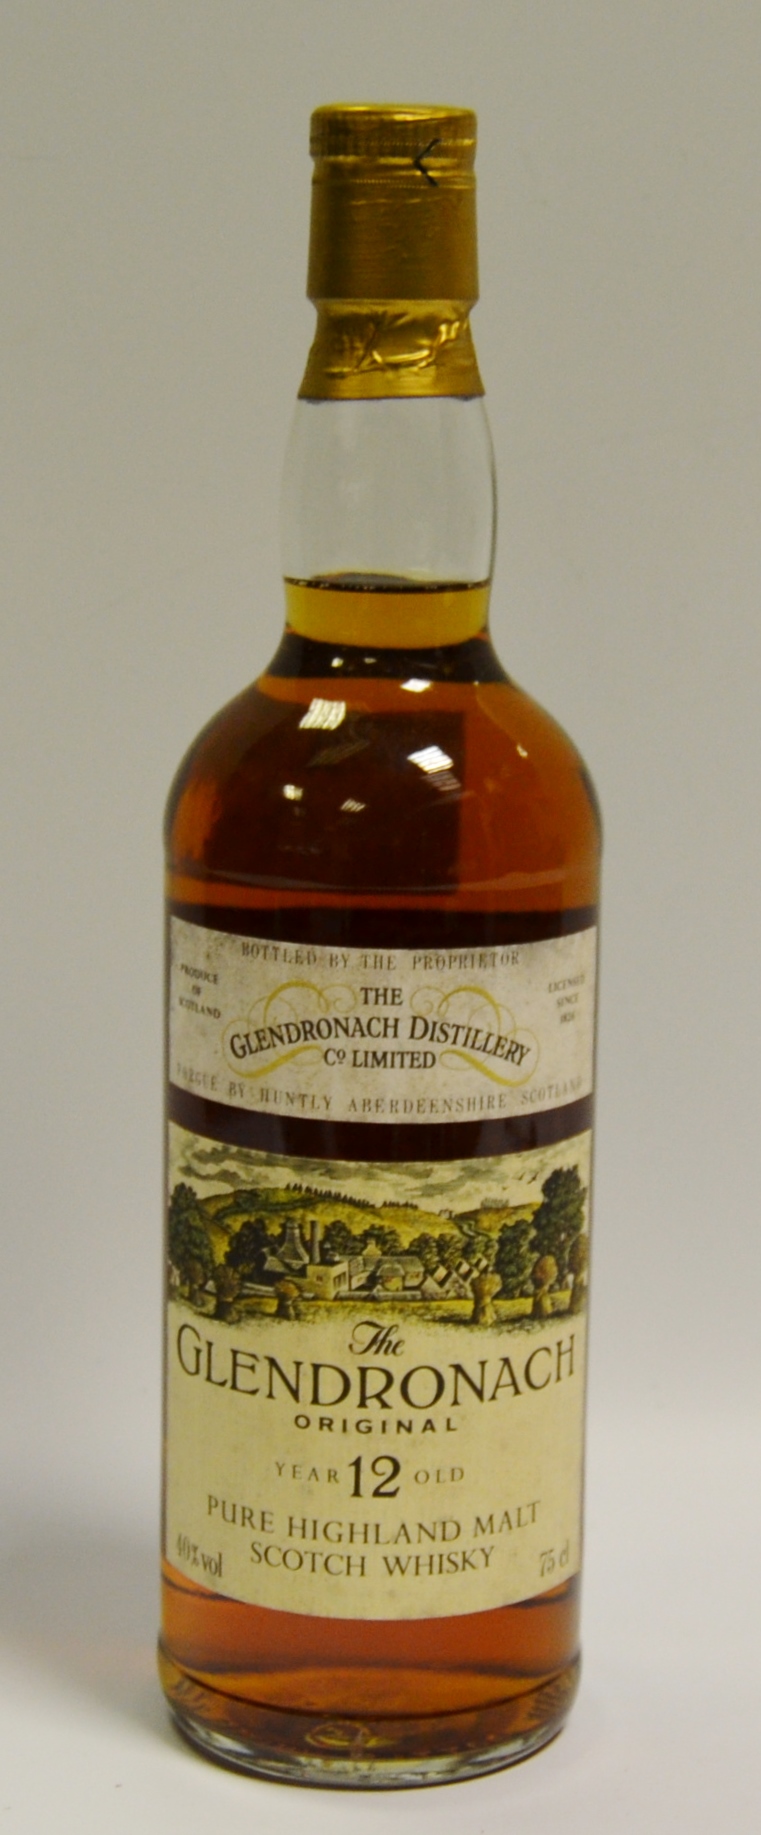 A bottle of Glendronach Distillery original 12 year scotch whisky